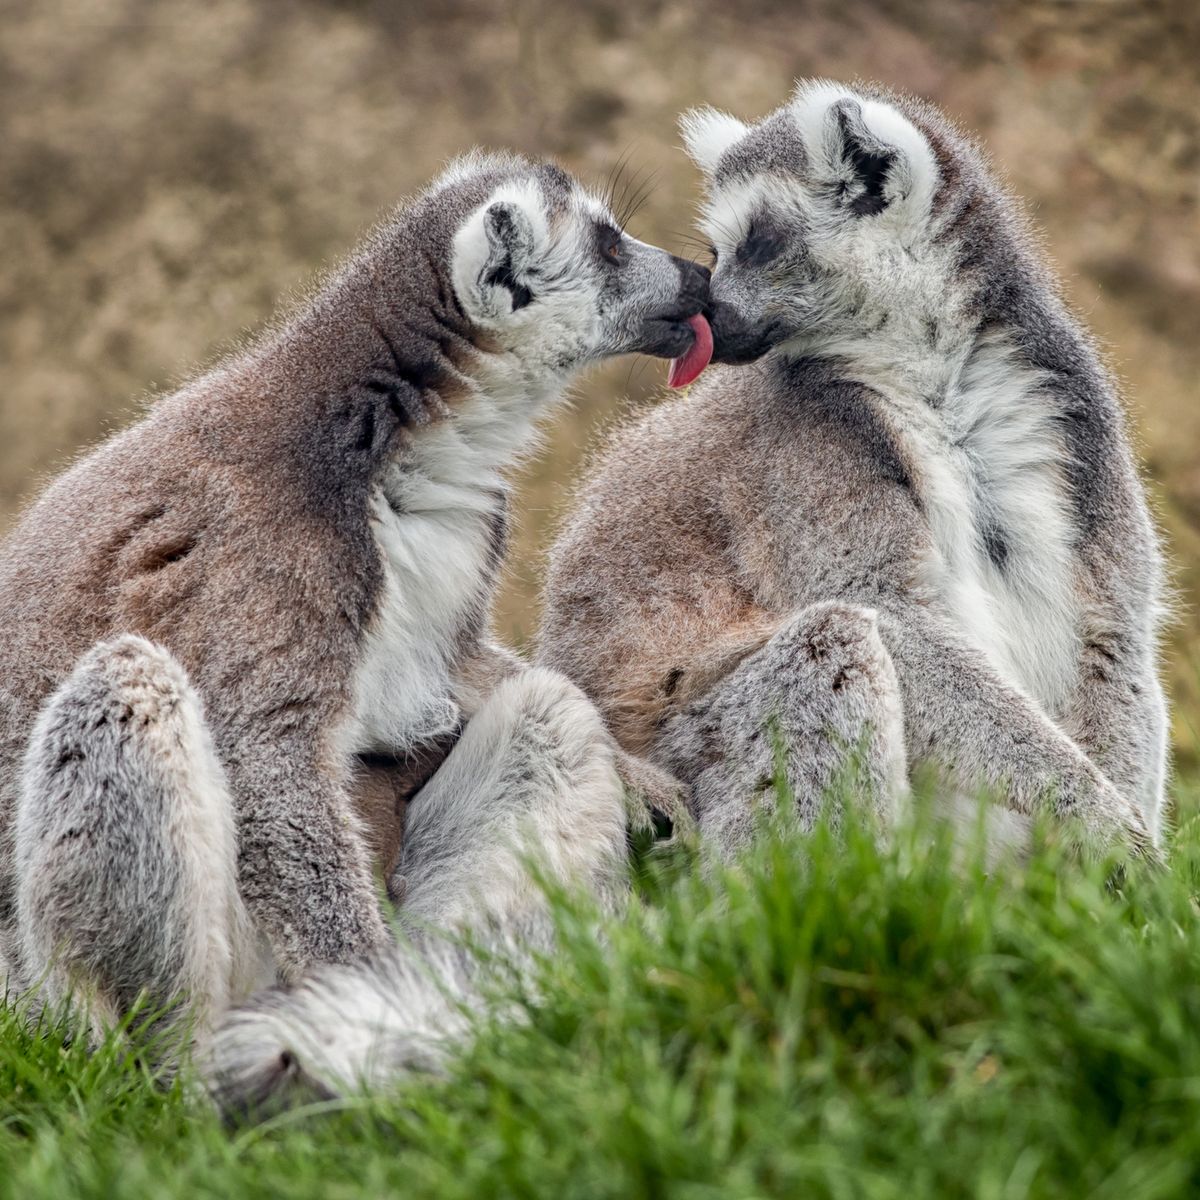 liefdevolle lemurs of toch niet